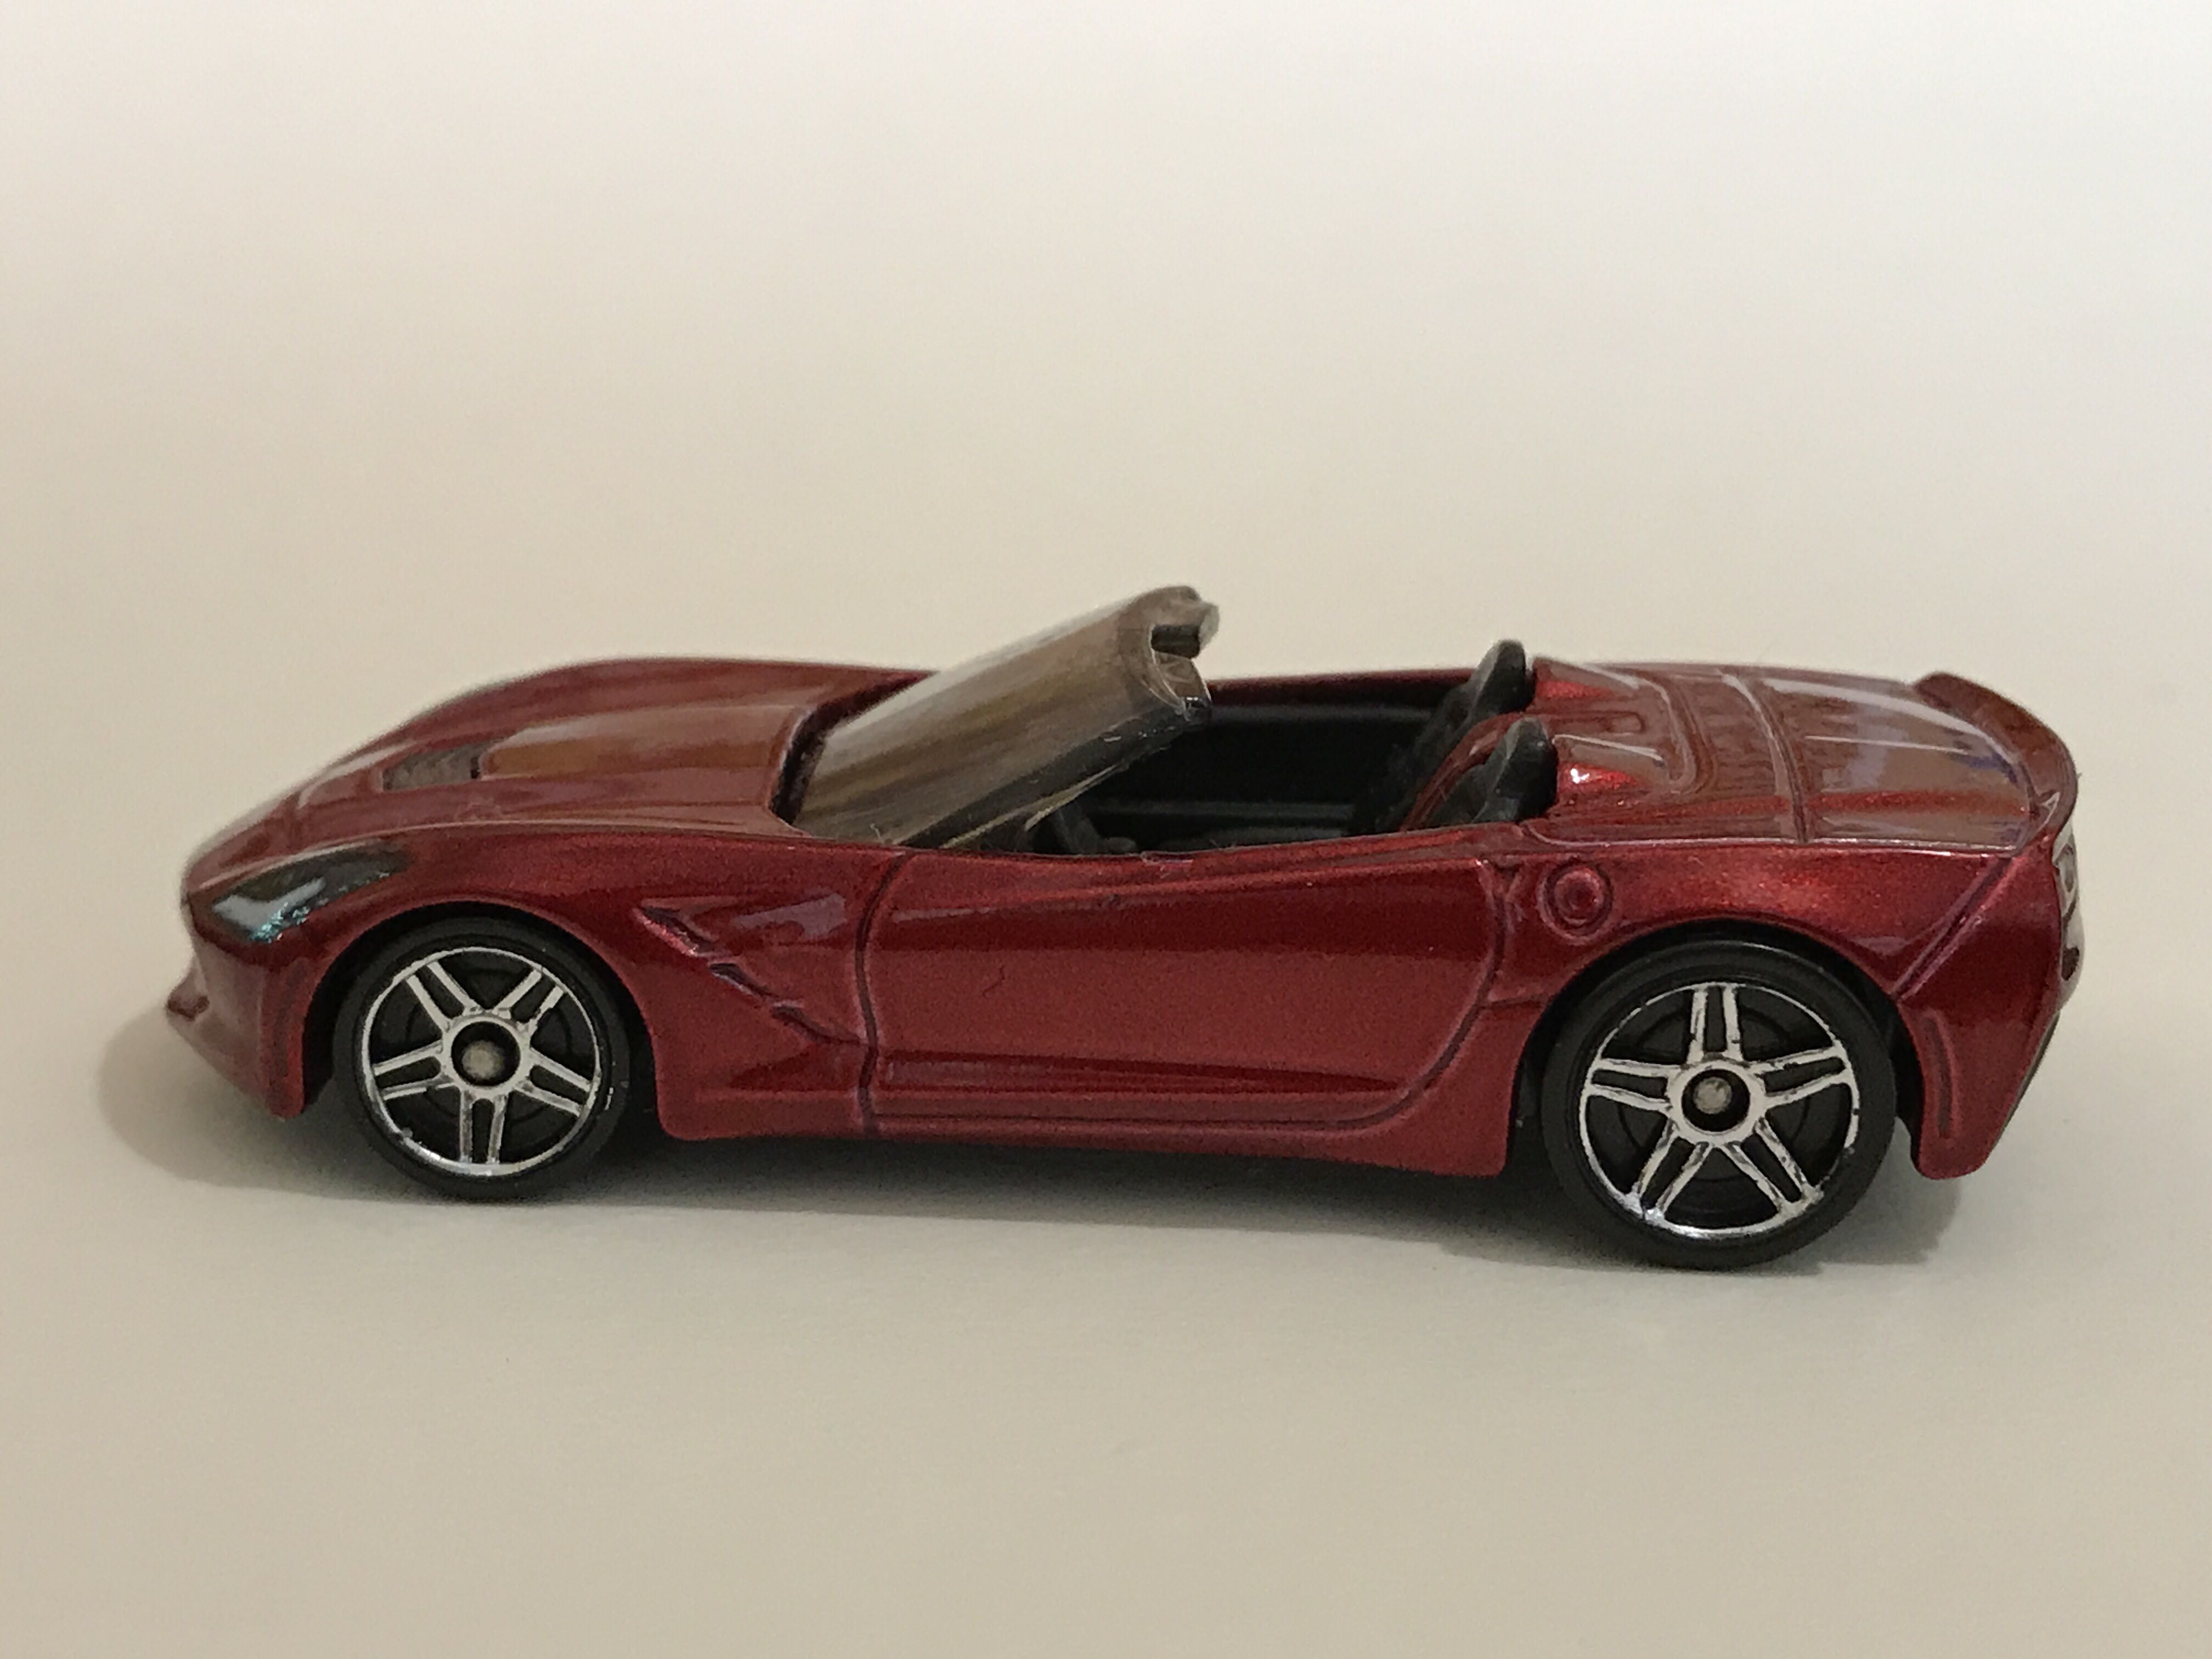 ‘14 Corvette Stingray - 2014 - HW Workshop - Then & Now toy car collectible - Main Image 3